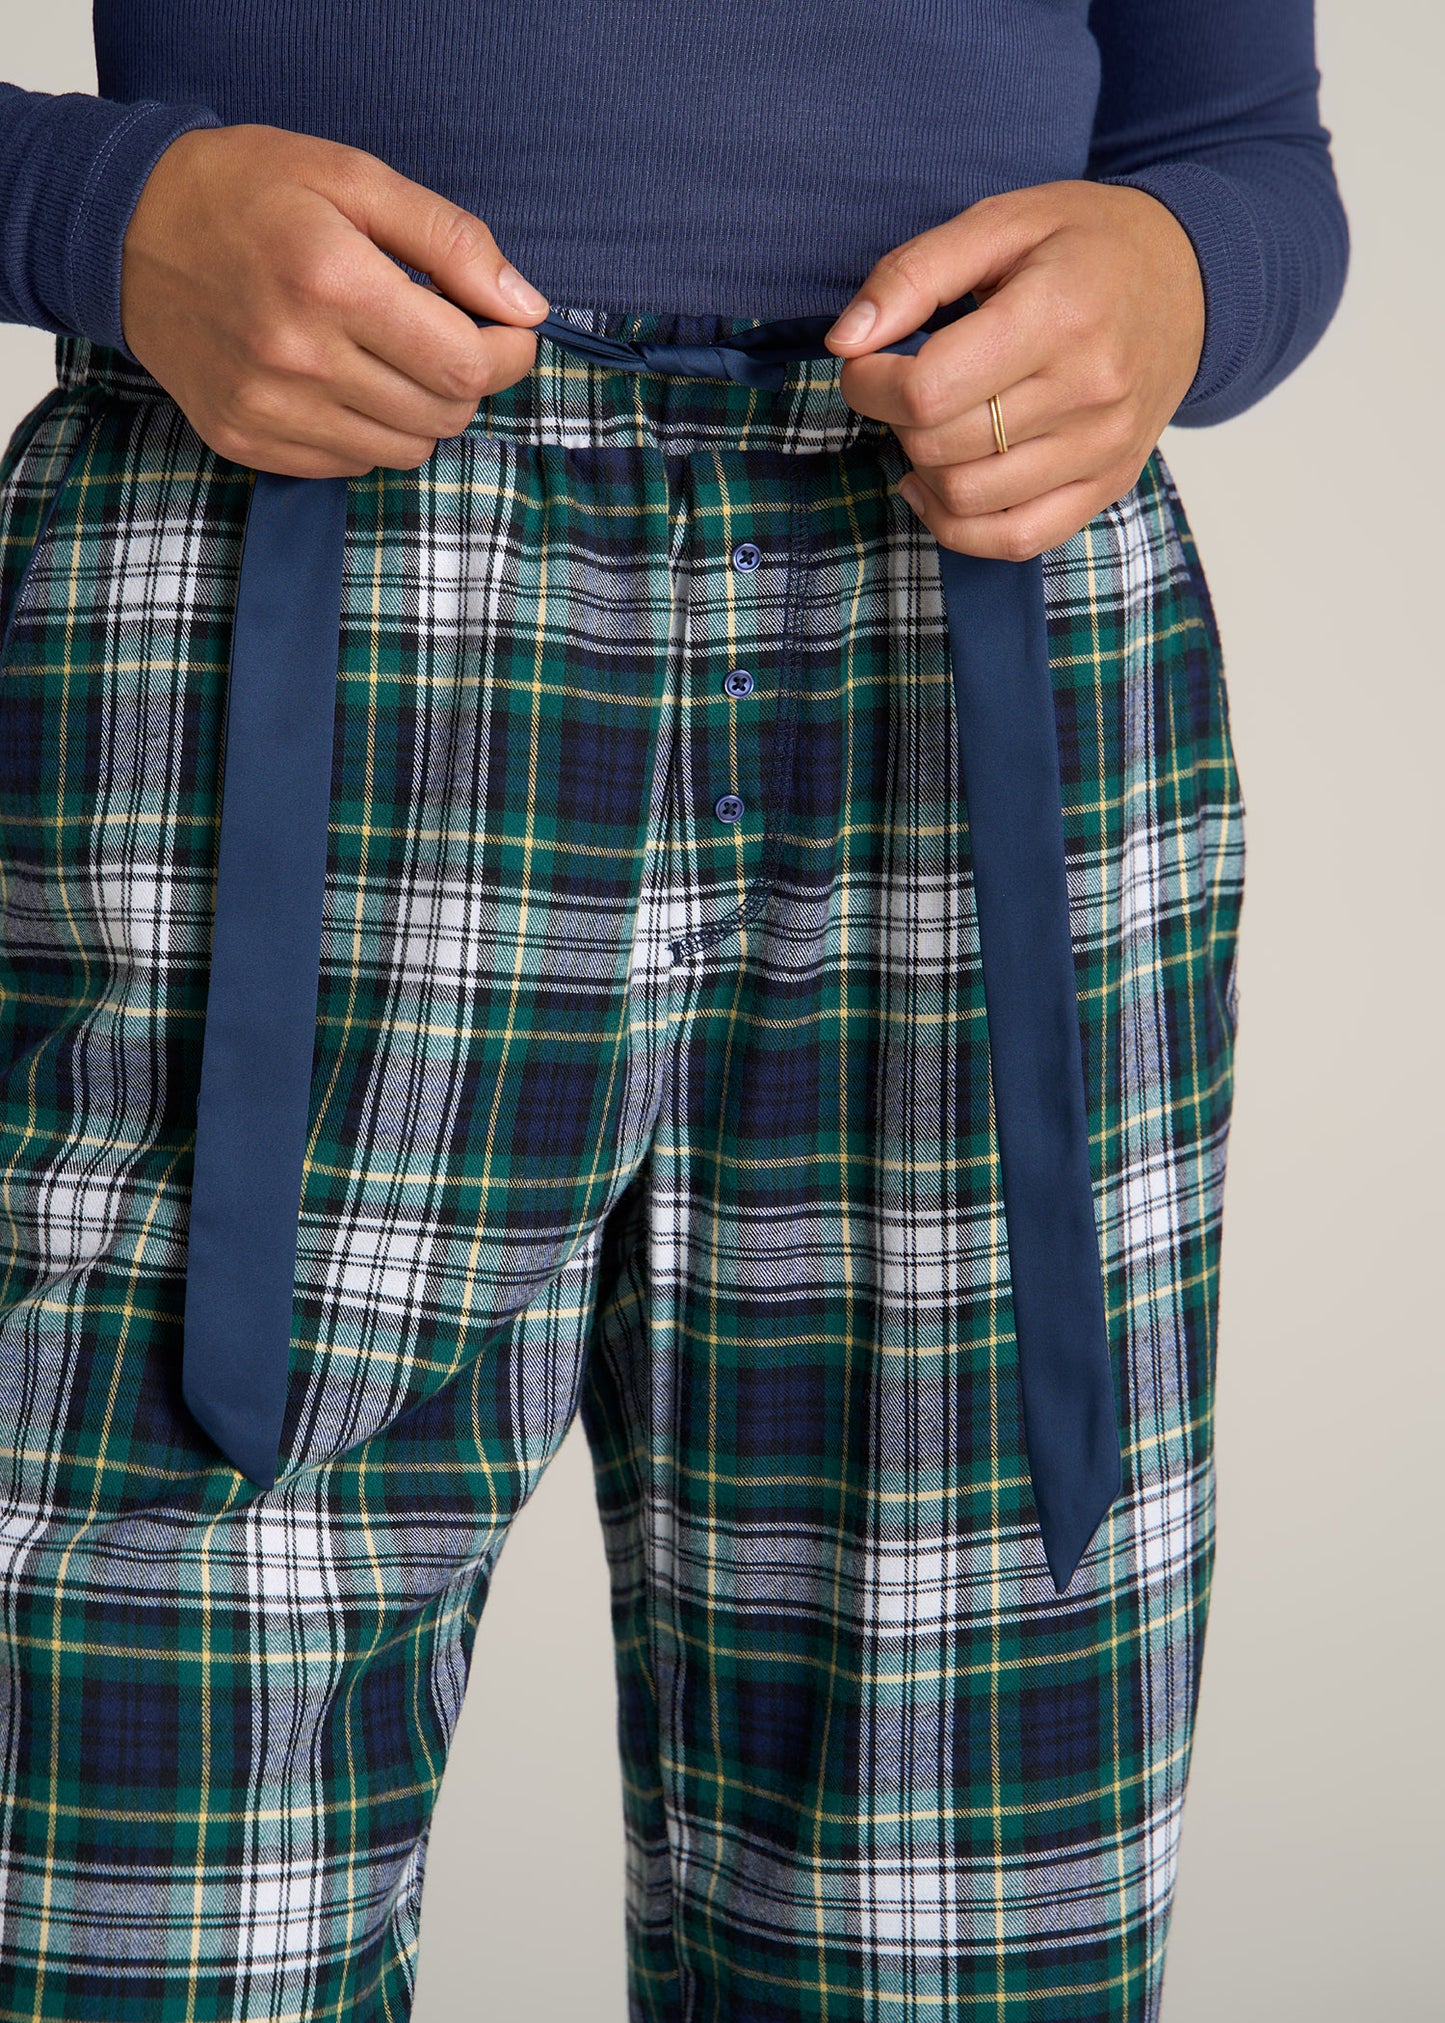 American-Tall-Women-Tie-Waist-Open-Bottom-Flannel-PJ-Pants-Green-Navy-Tartan-detail